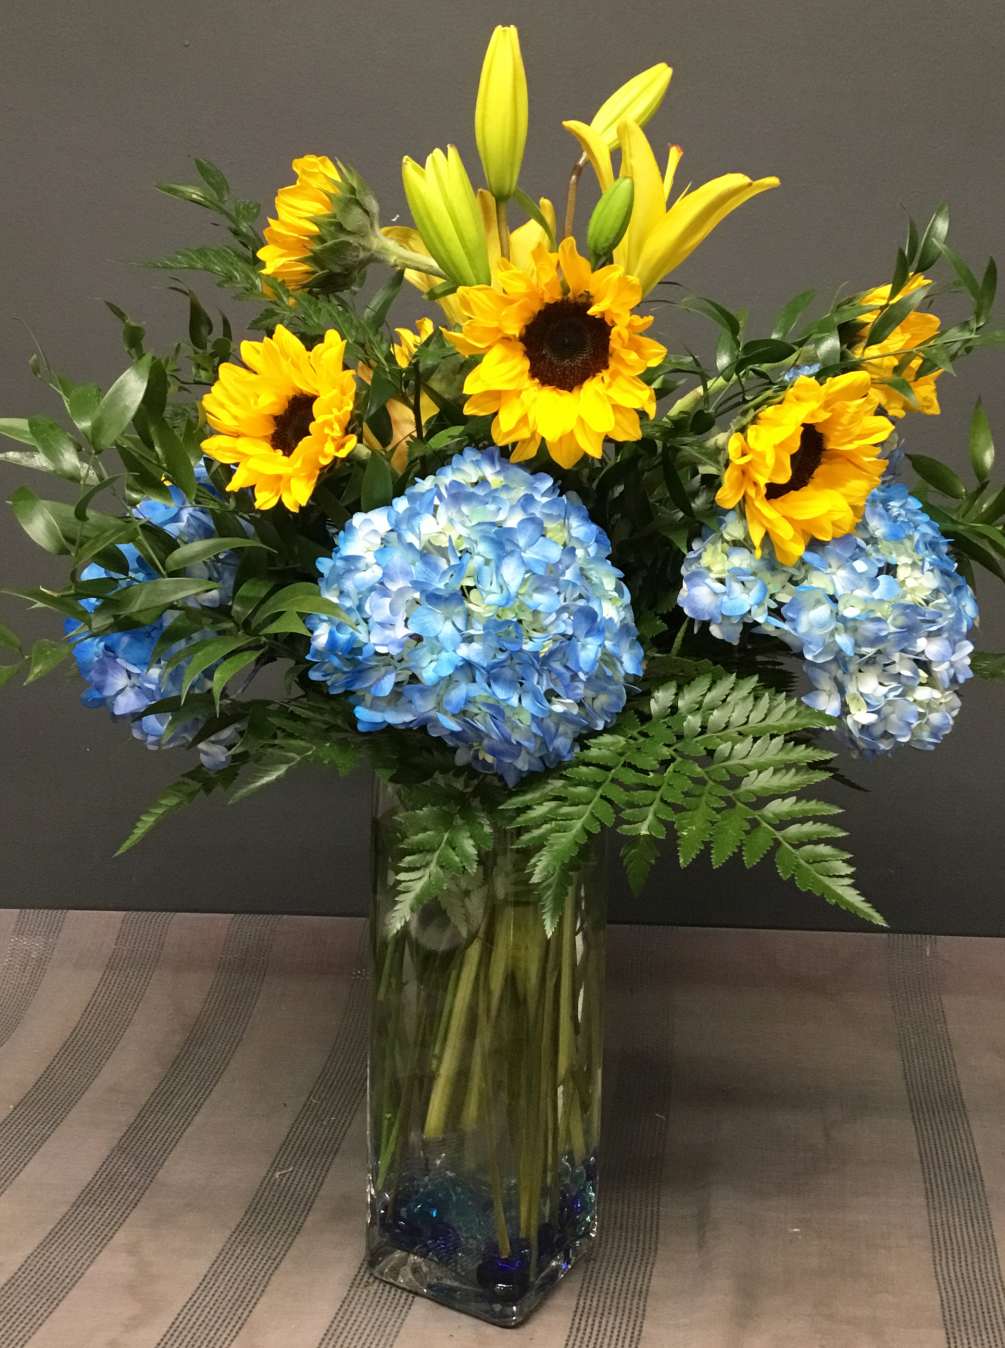 Blue Hydrangeas, Lilies and Sunflowers